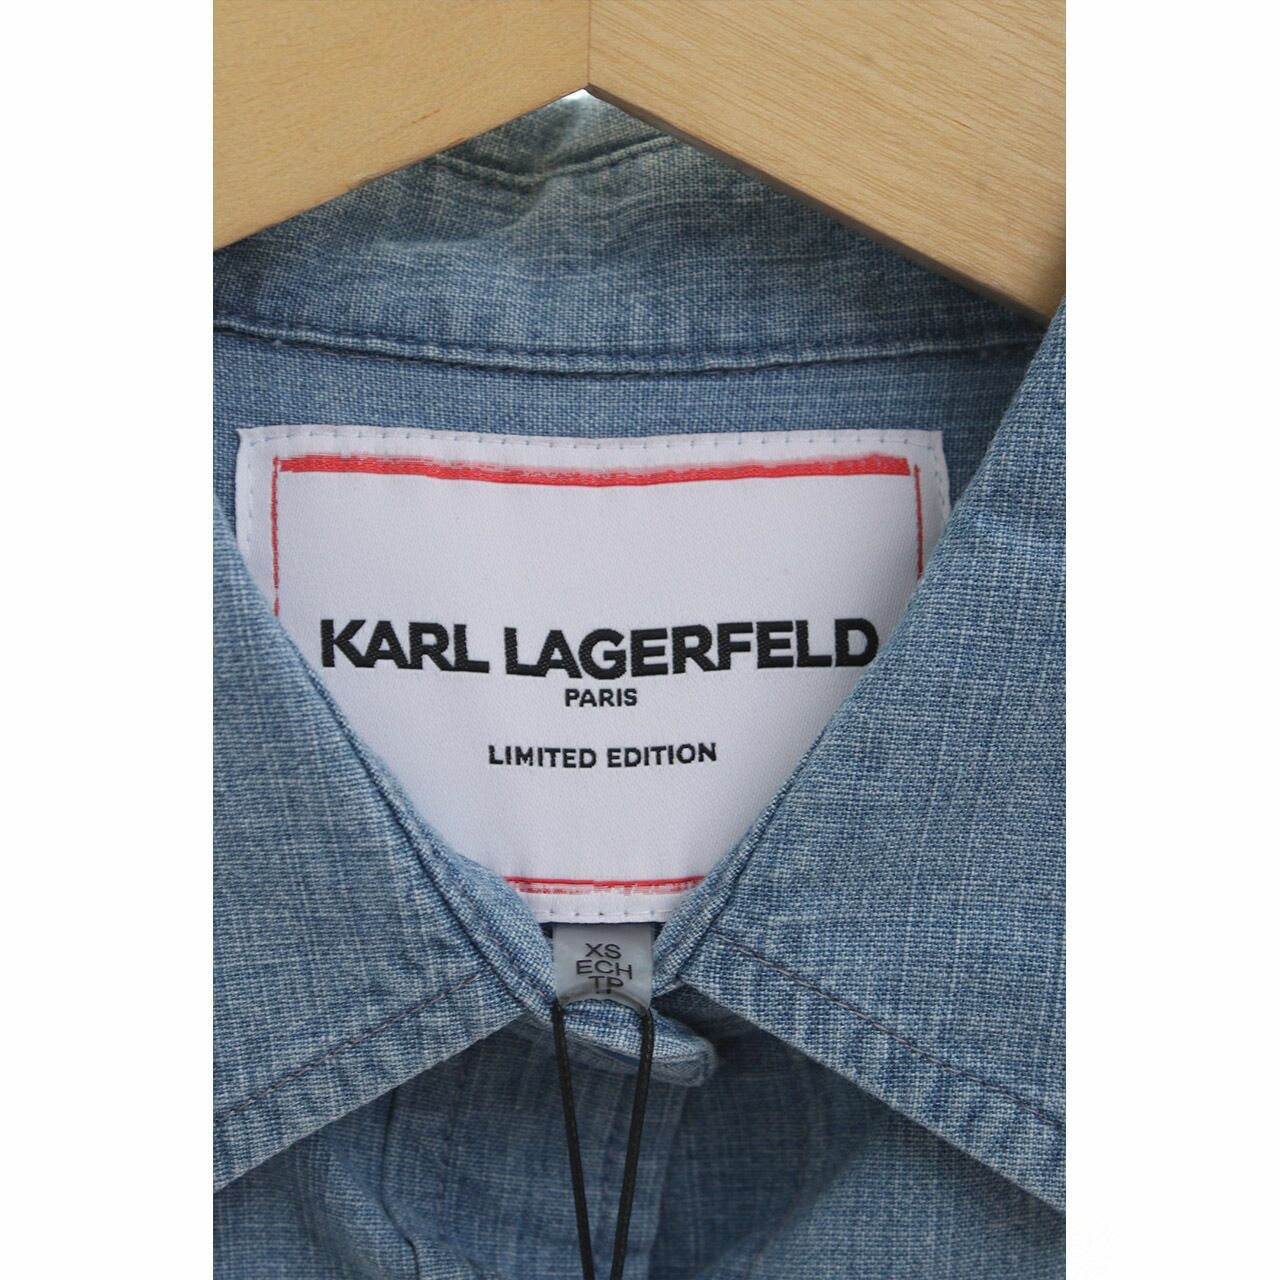 Karl Lagerfeld Graphic Print Sunglasses Chambray Denim Shirt